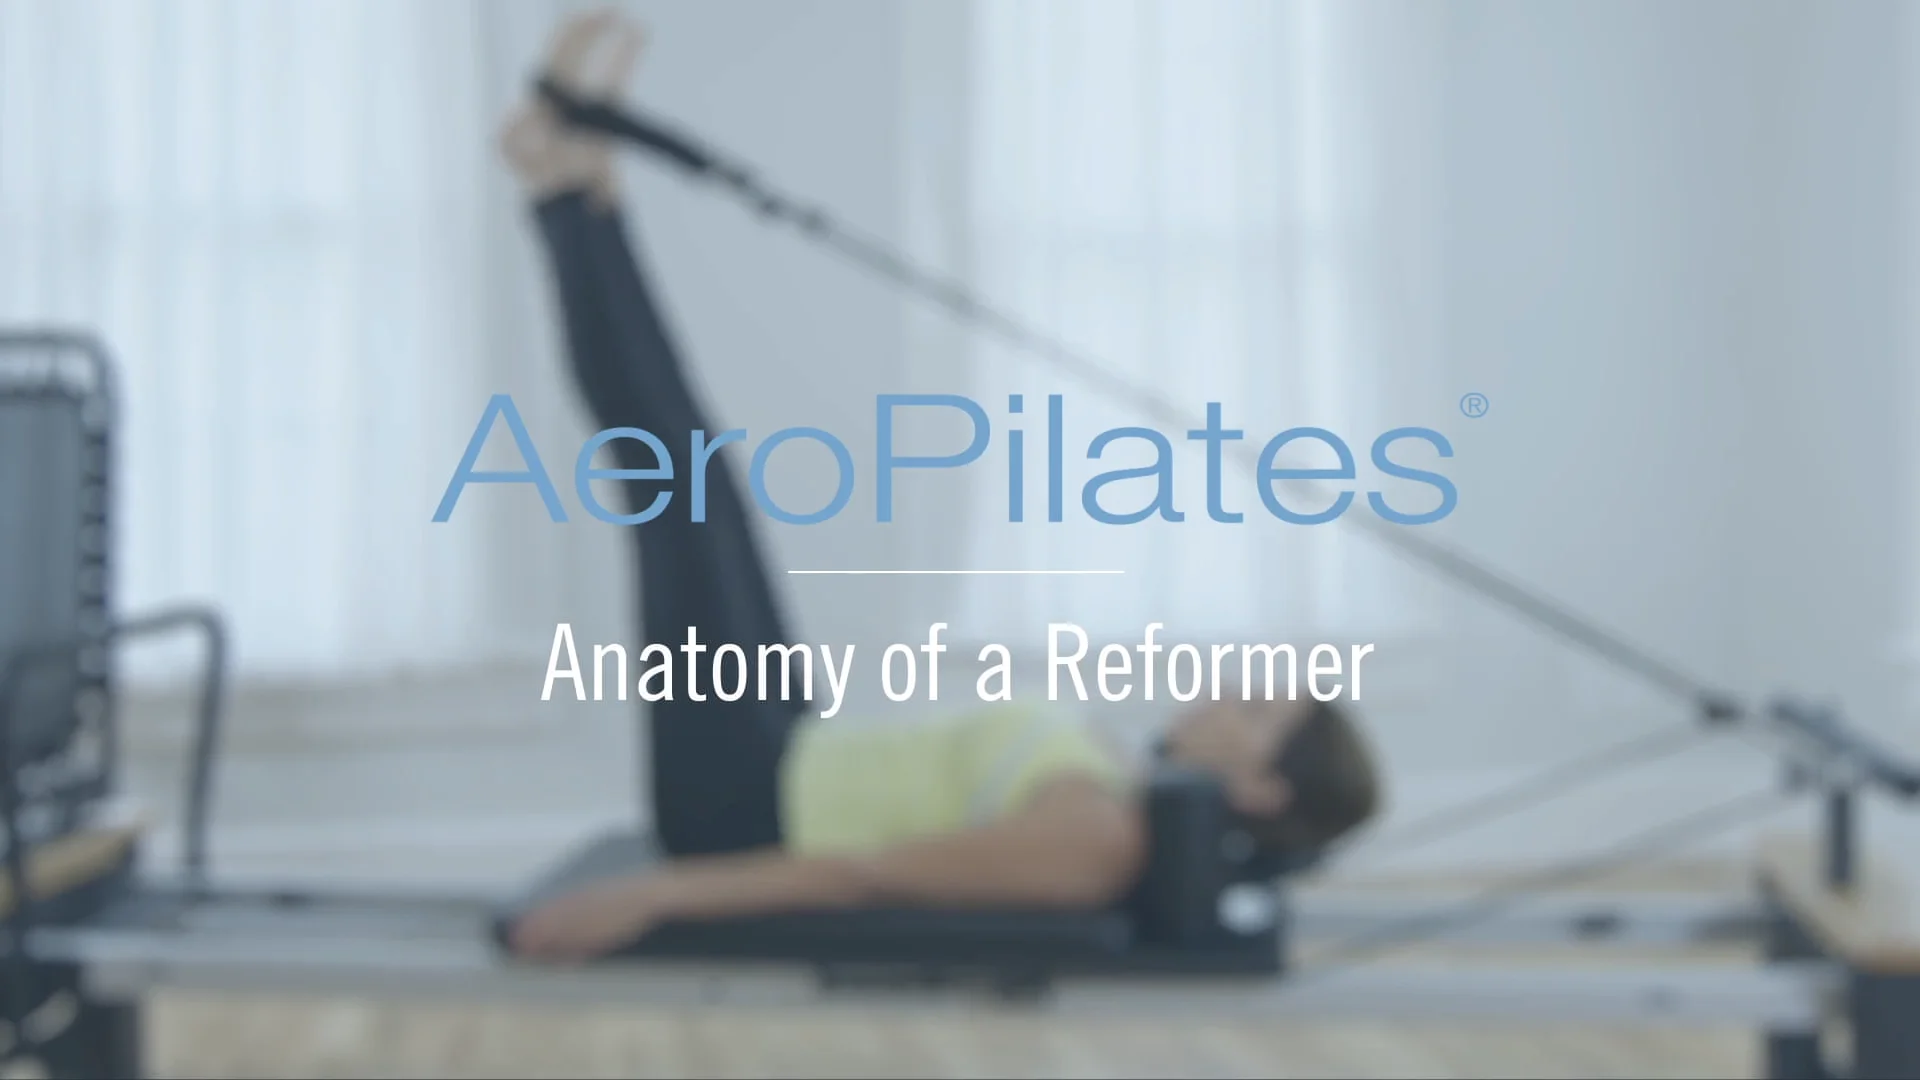 AeroPilates Pro 565 Reformer - 55-5565 on Vimeo